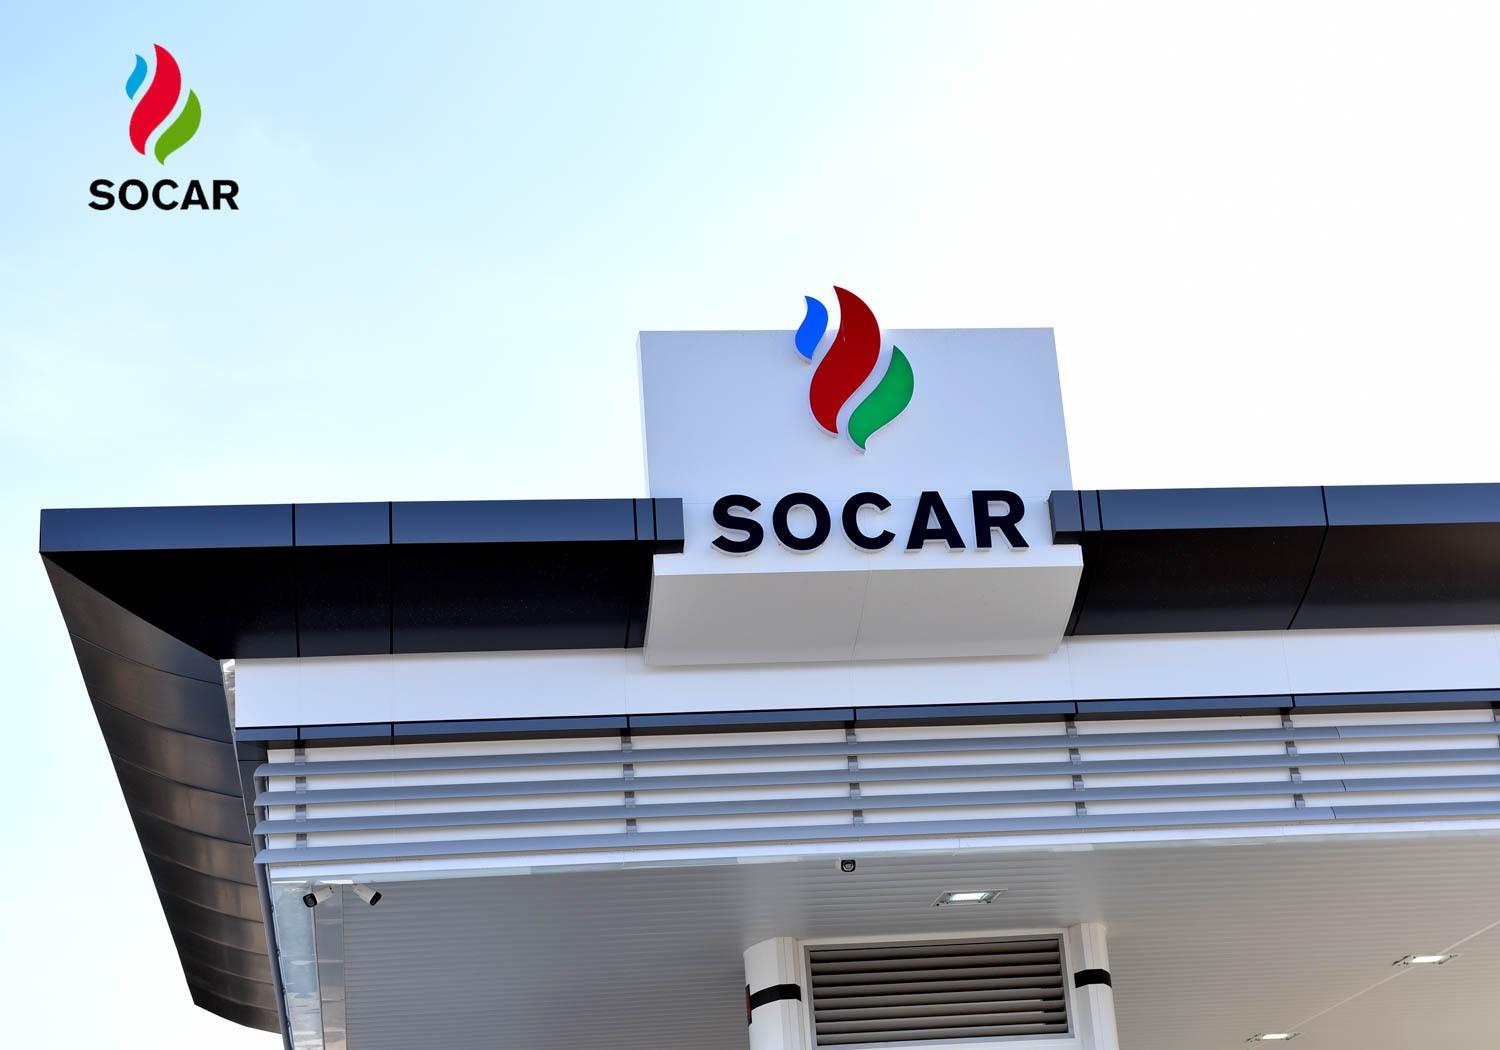 Socar portala giriş. SOCAR АЗС. Заправка Сокар. Логотип Сокар. Сокар заправки в Азербайджан.